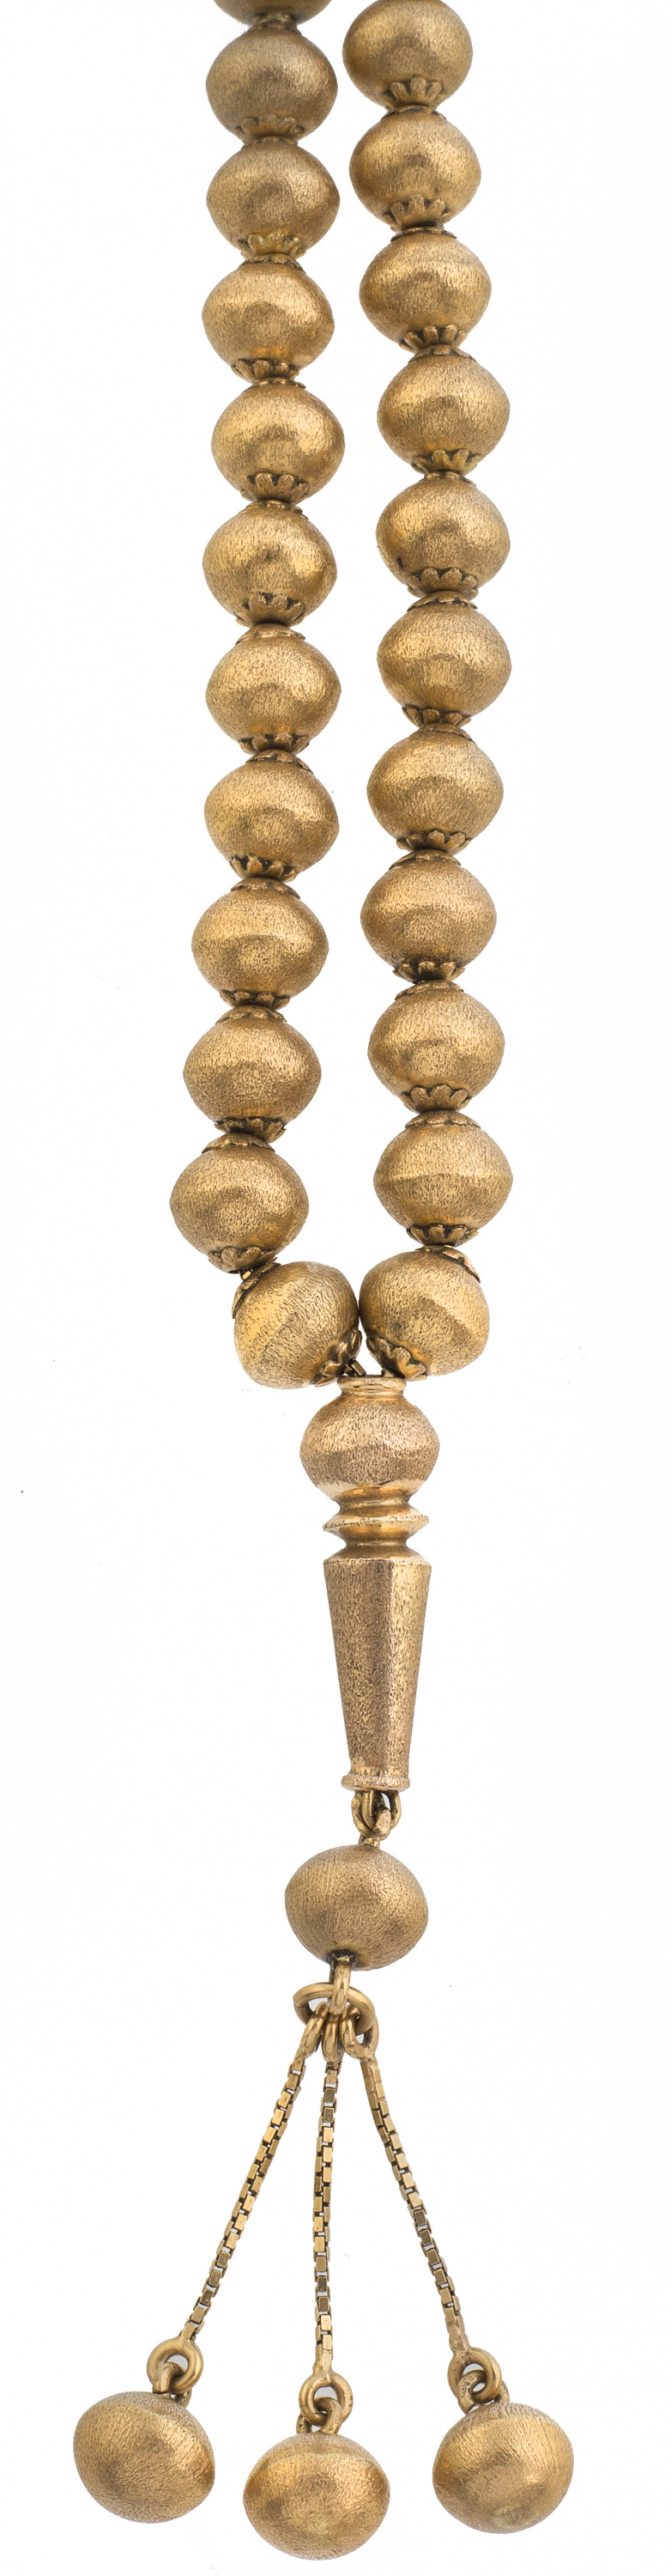 Tashbi o rosario musulmán con cuentas de oro mate insertada